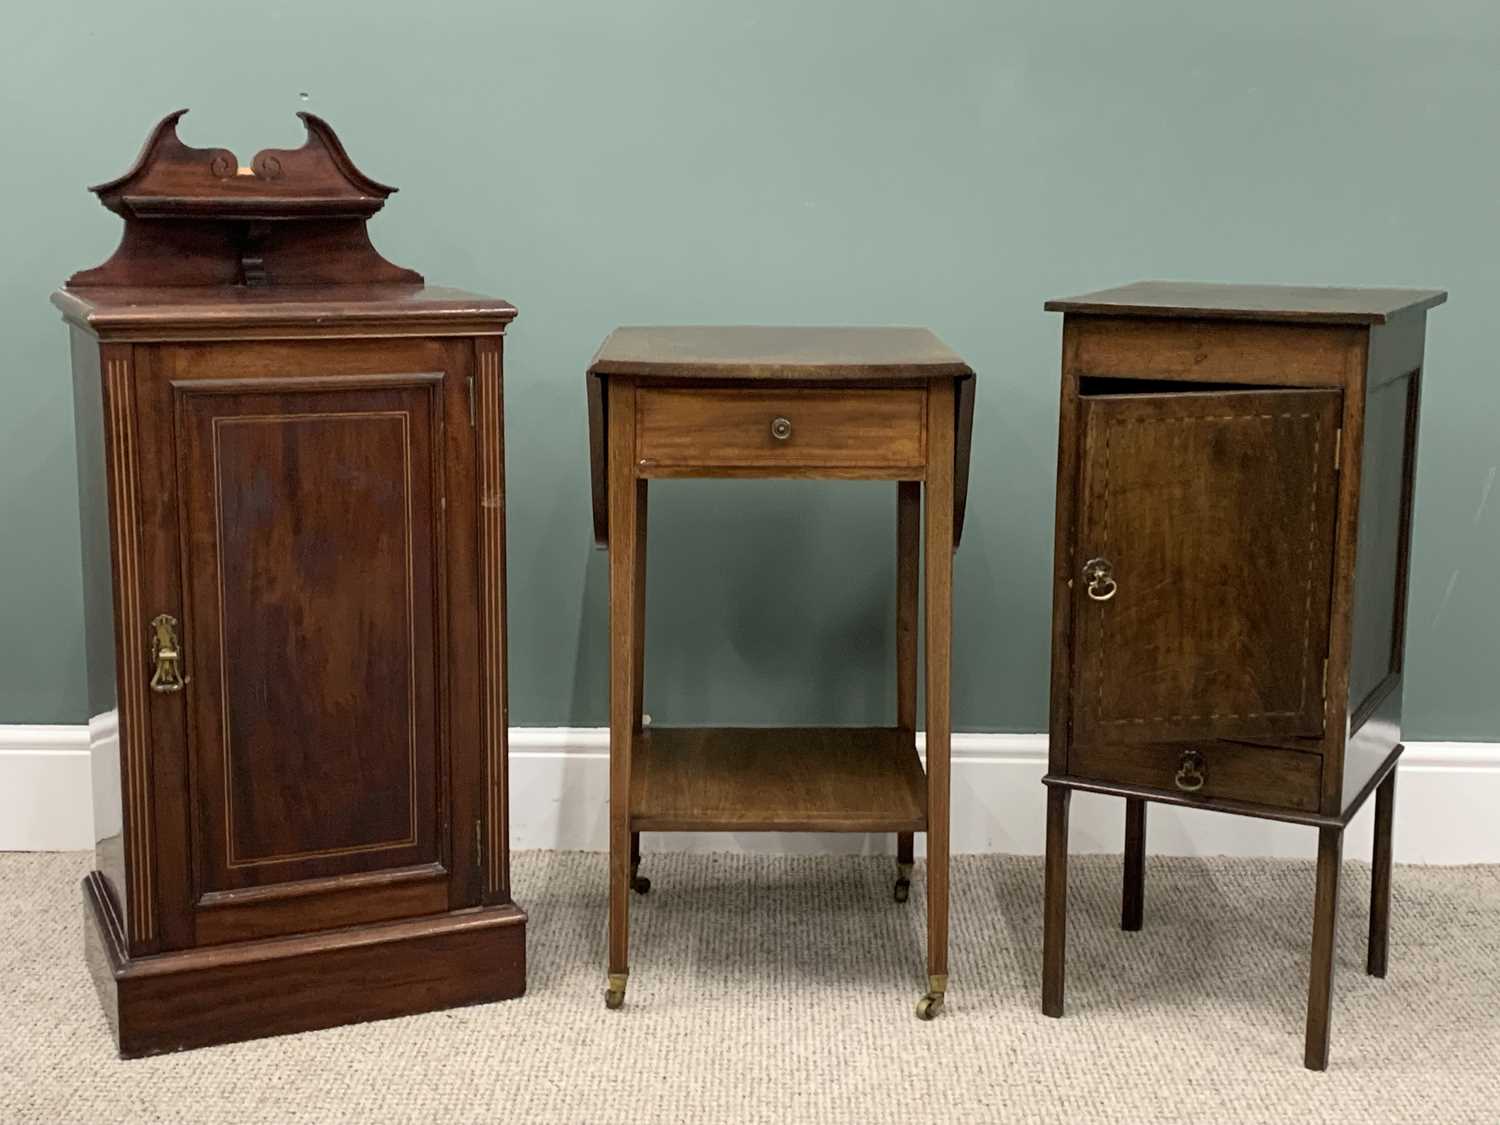 THREE INLAID MAHOGANY OCCASIONAL FURNITURE ITEMS, comprising Victorian mahogany pot cupboard, shaped